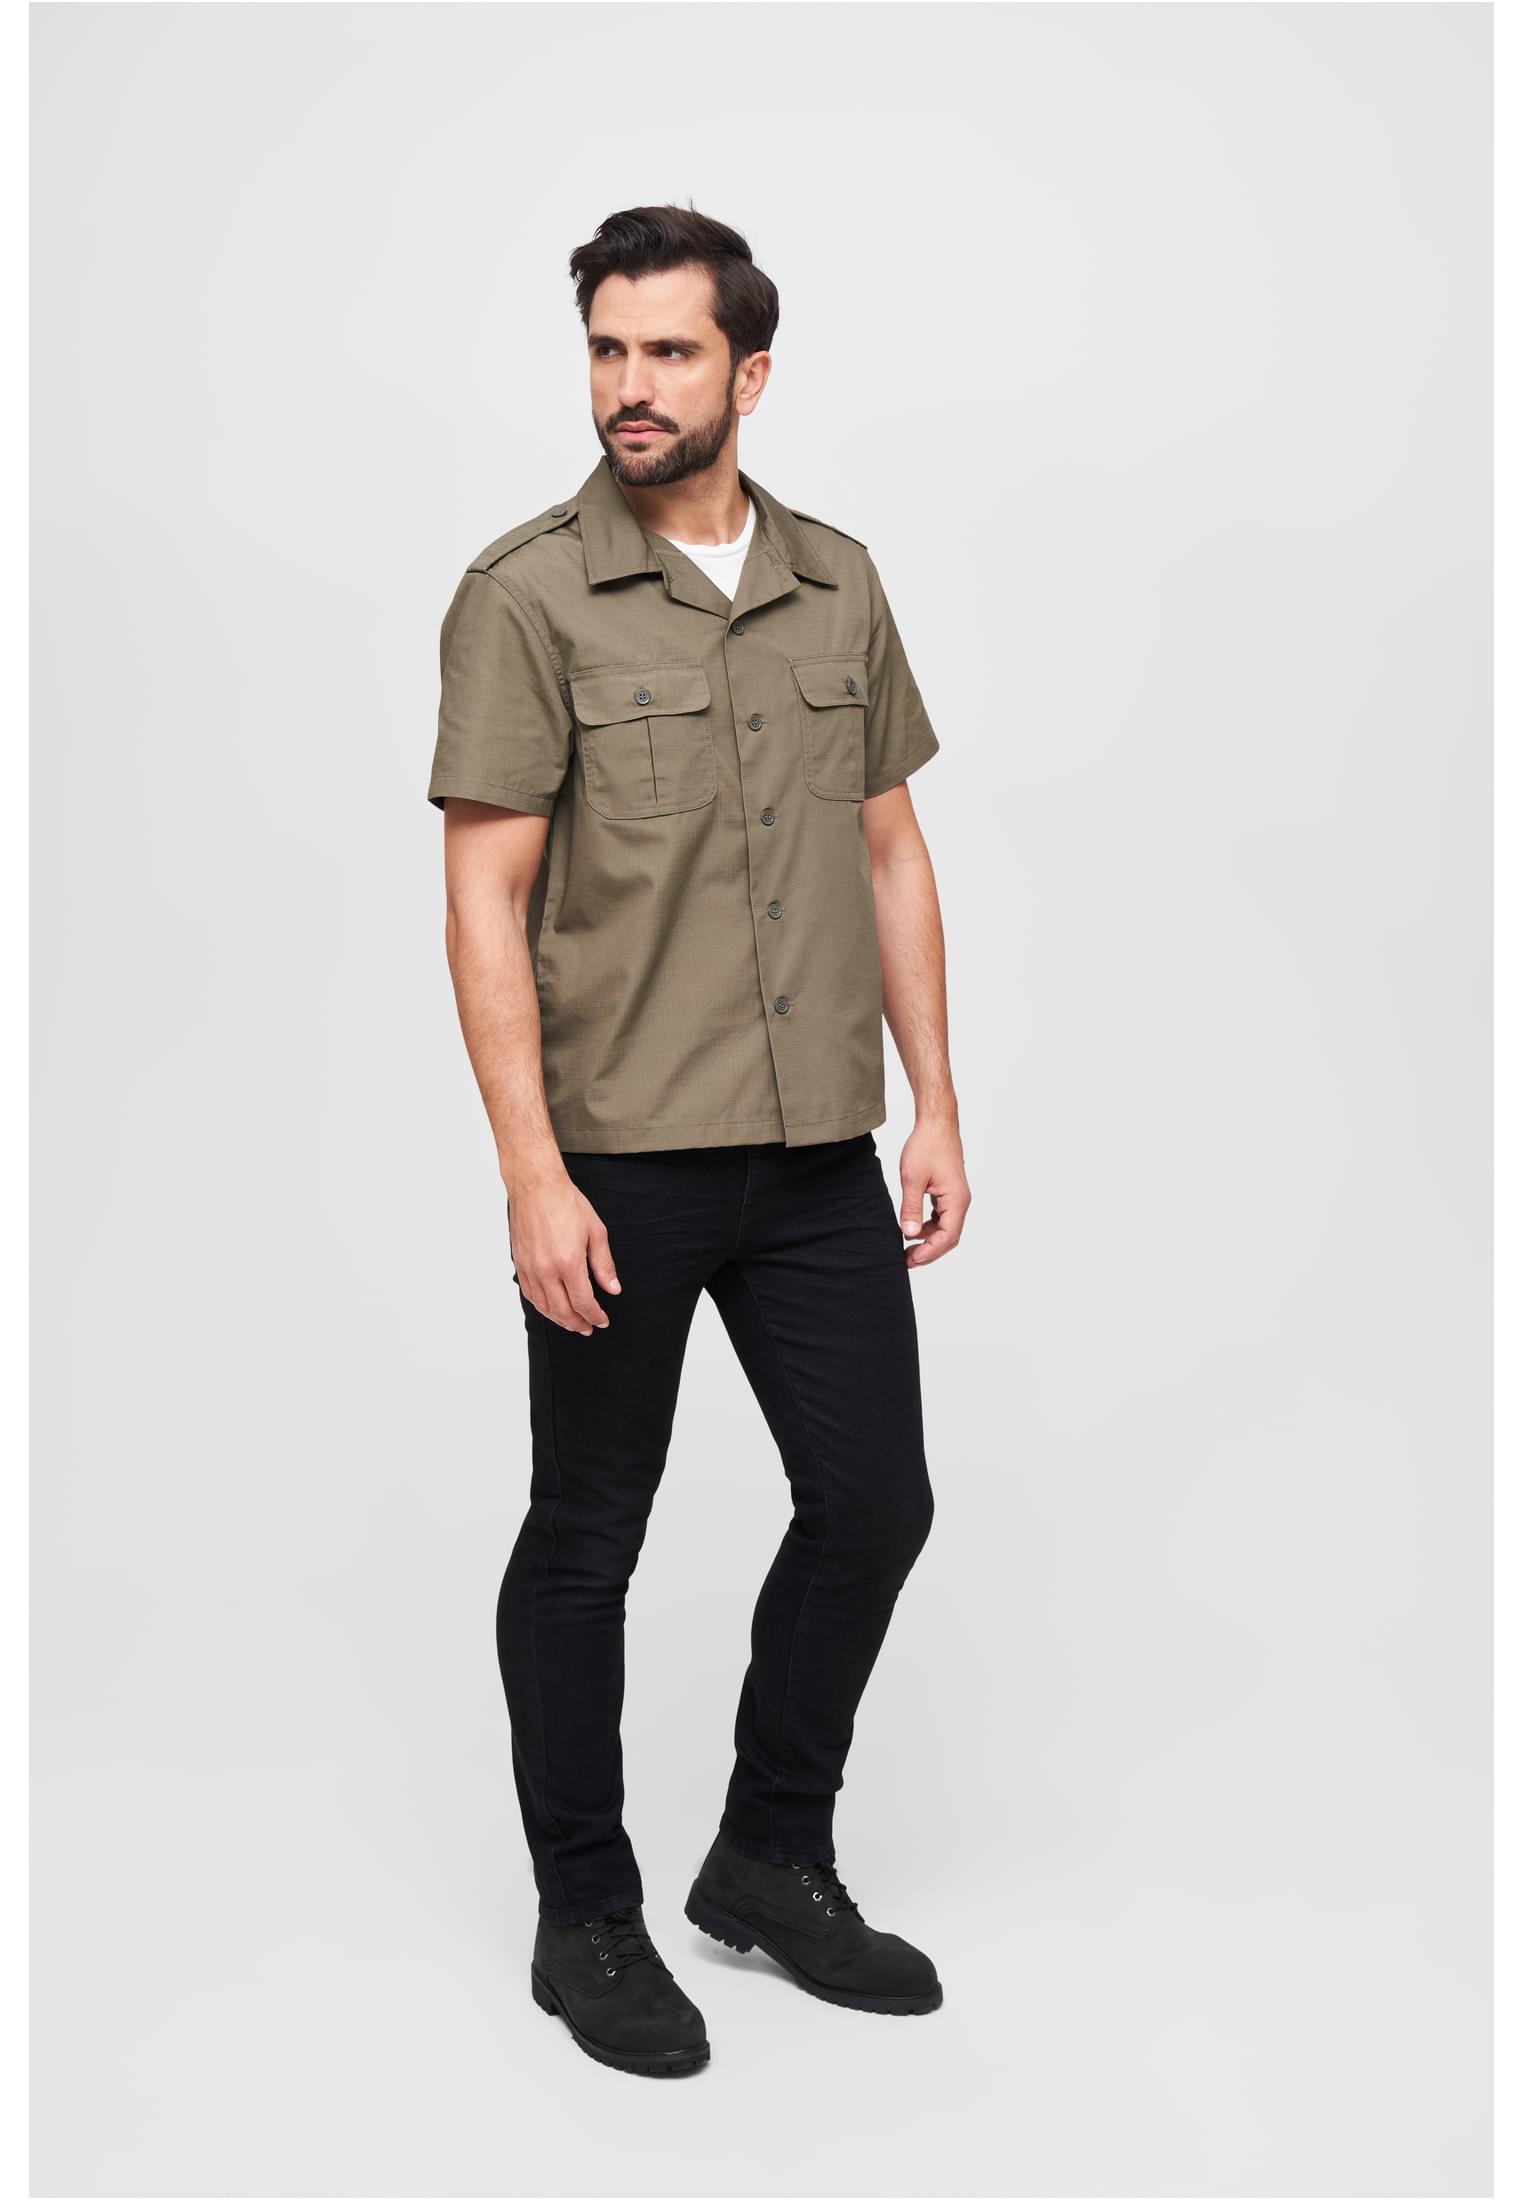 Hemden US Shirt Ripstop shortsleeve in Farbe olive